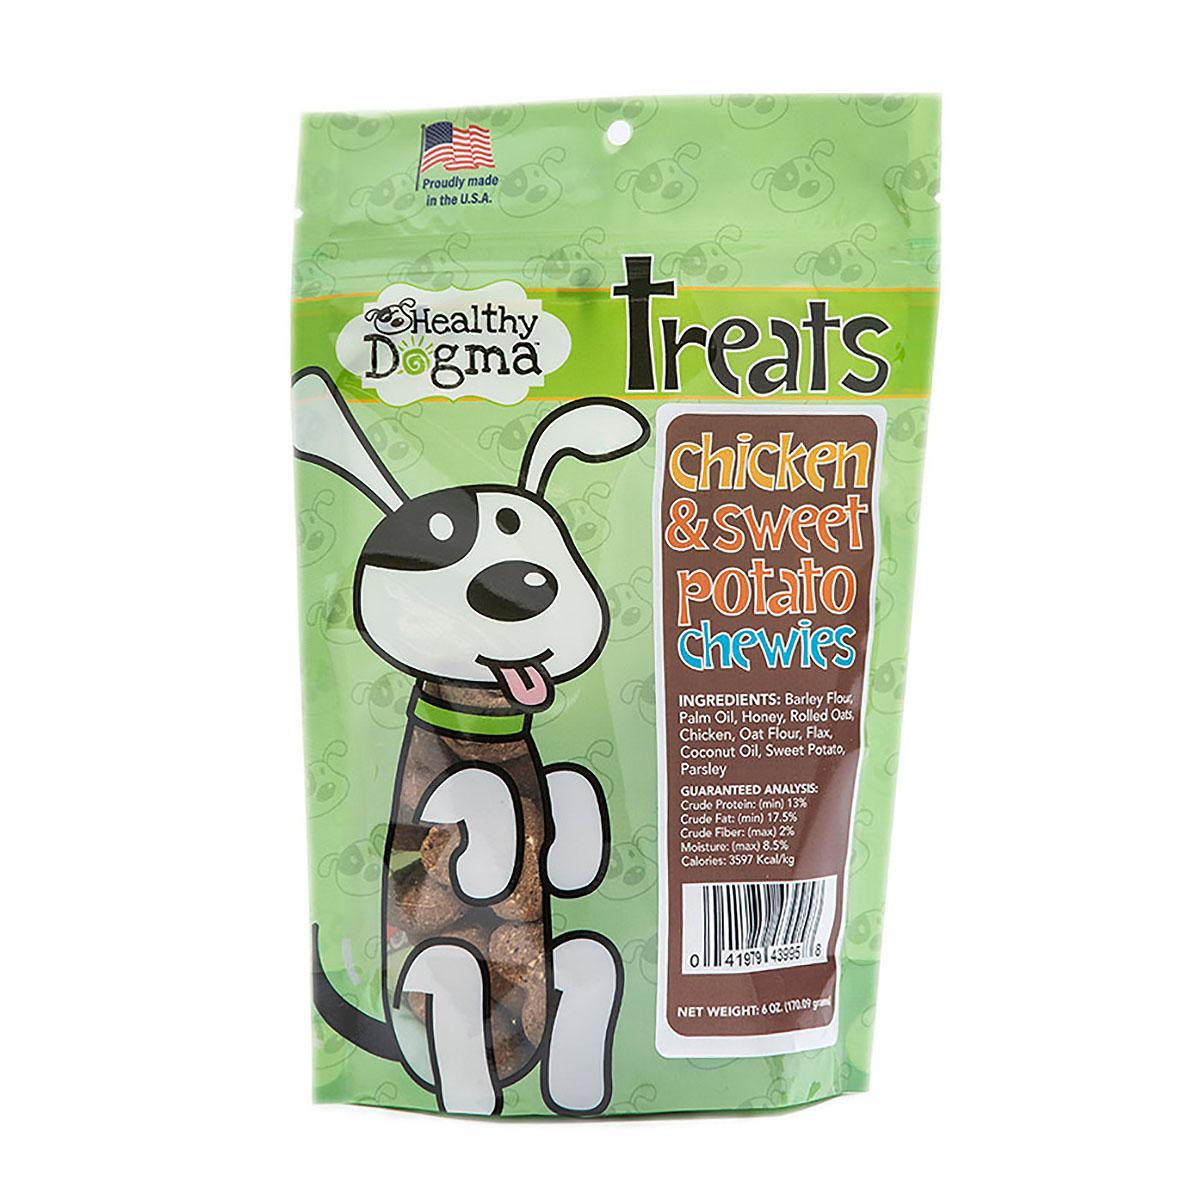 Healthy Dogma Chicken and Sweet Potato Chewies Dog Treats